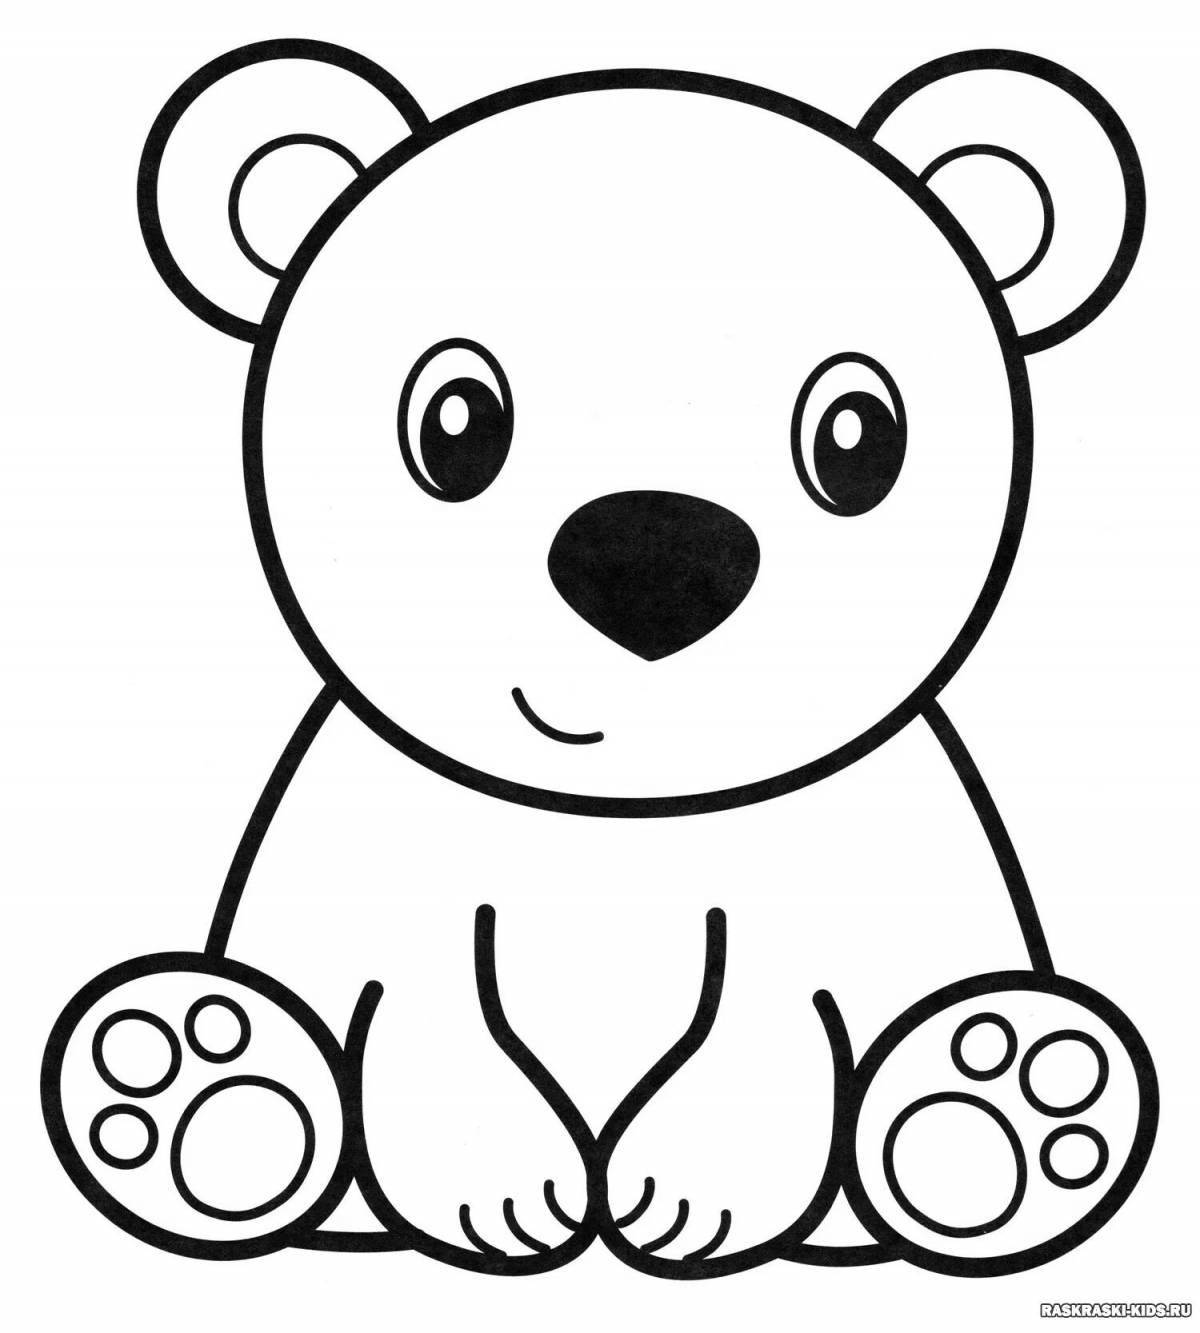 Coloring book playful teddy bear